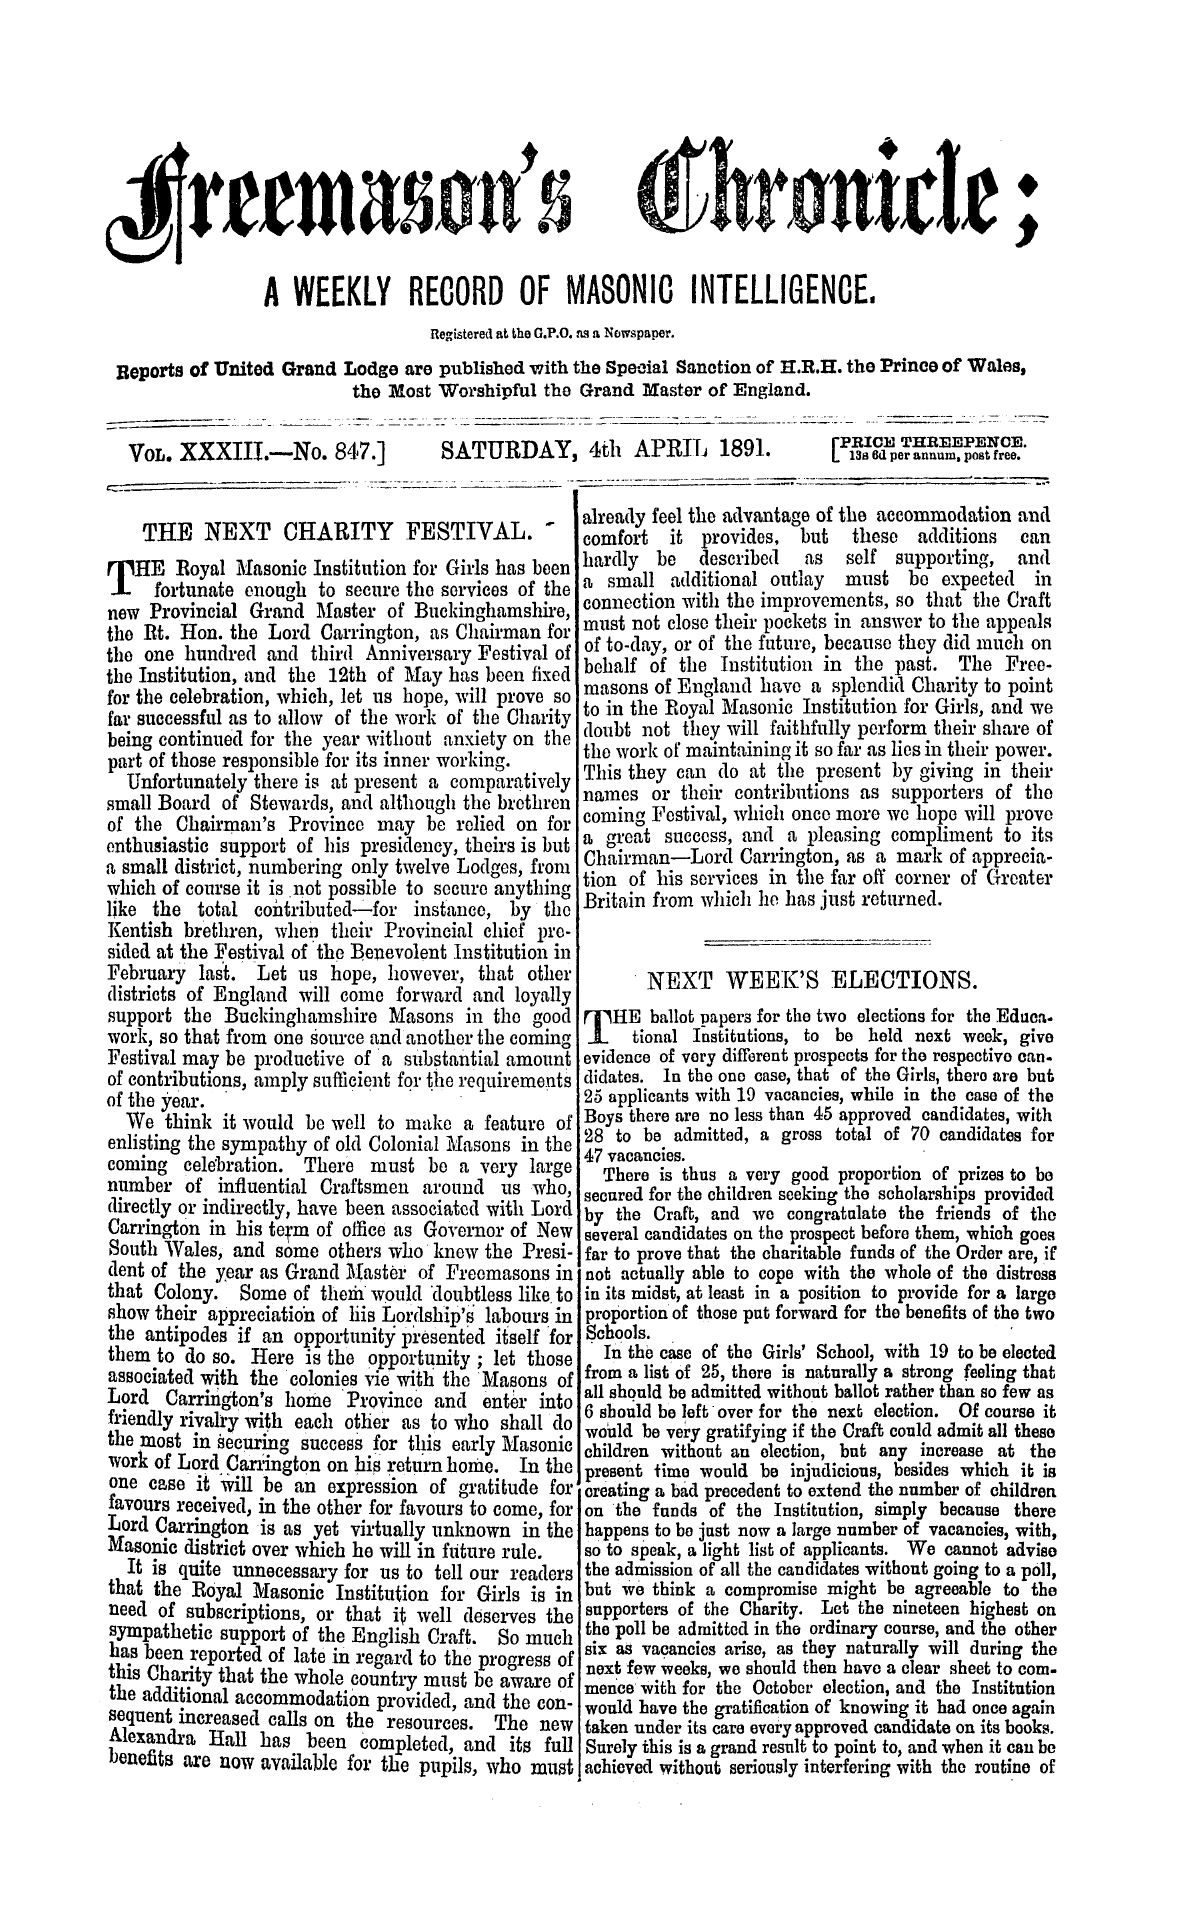 The Freemason's Chronicle: 1891-04-04 - The Next Charity Festival.